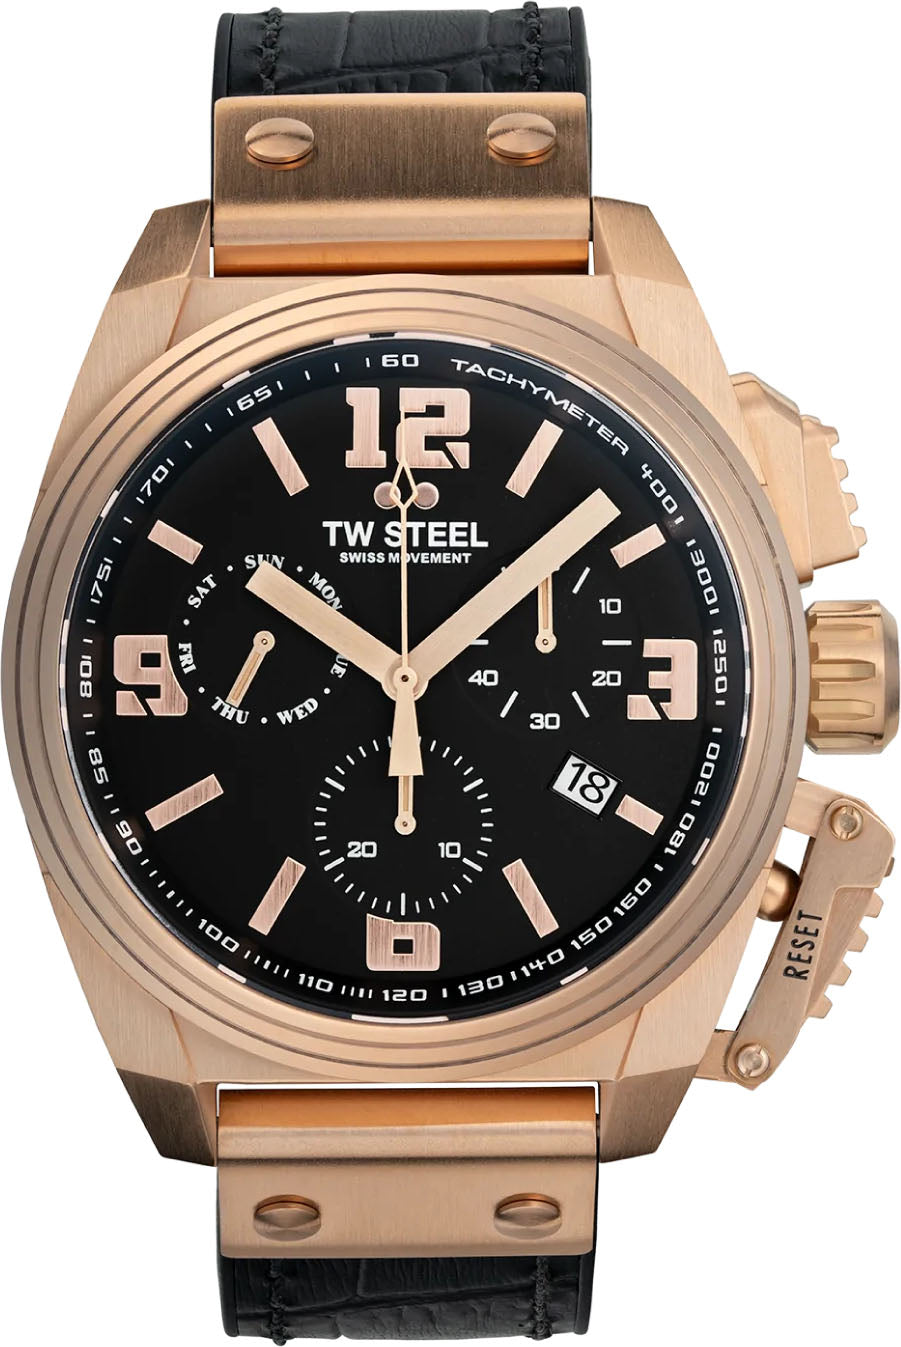 Photos - Wrist Watch TW Steel Watch Swiss Canteen - Black TW-706 